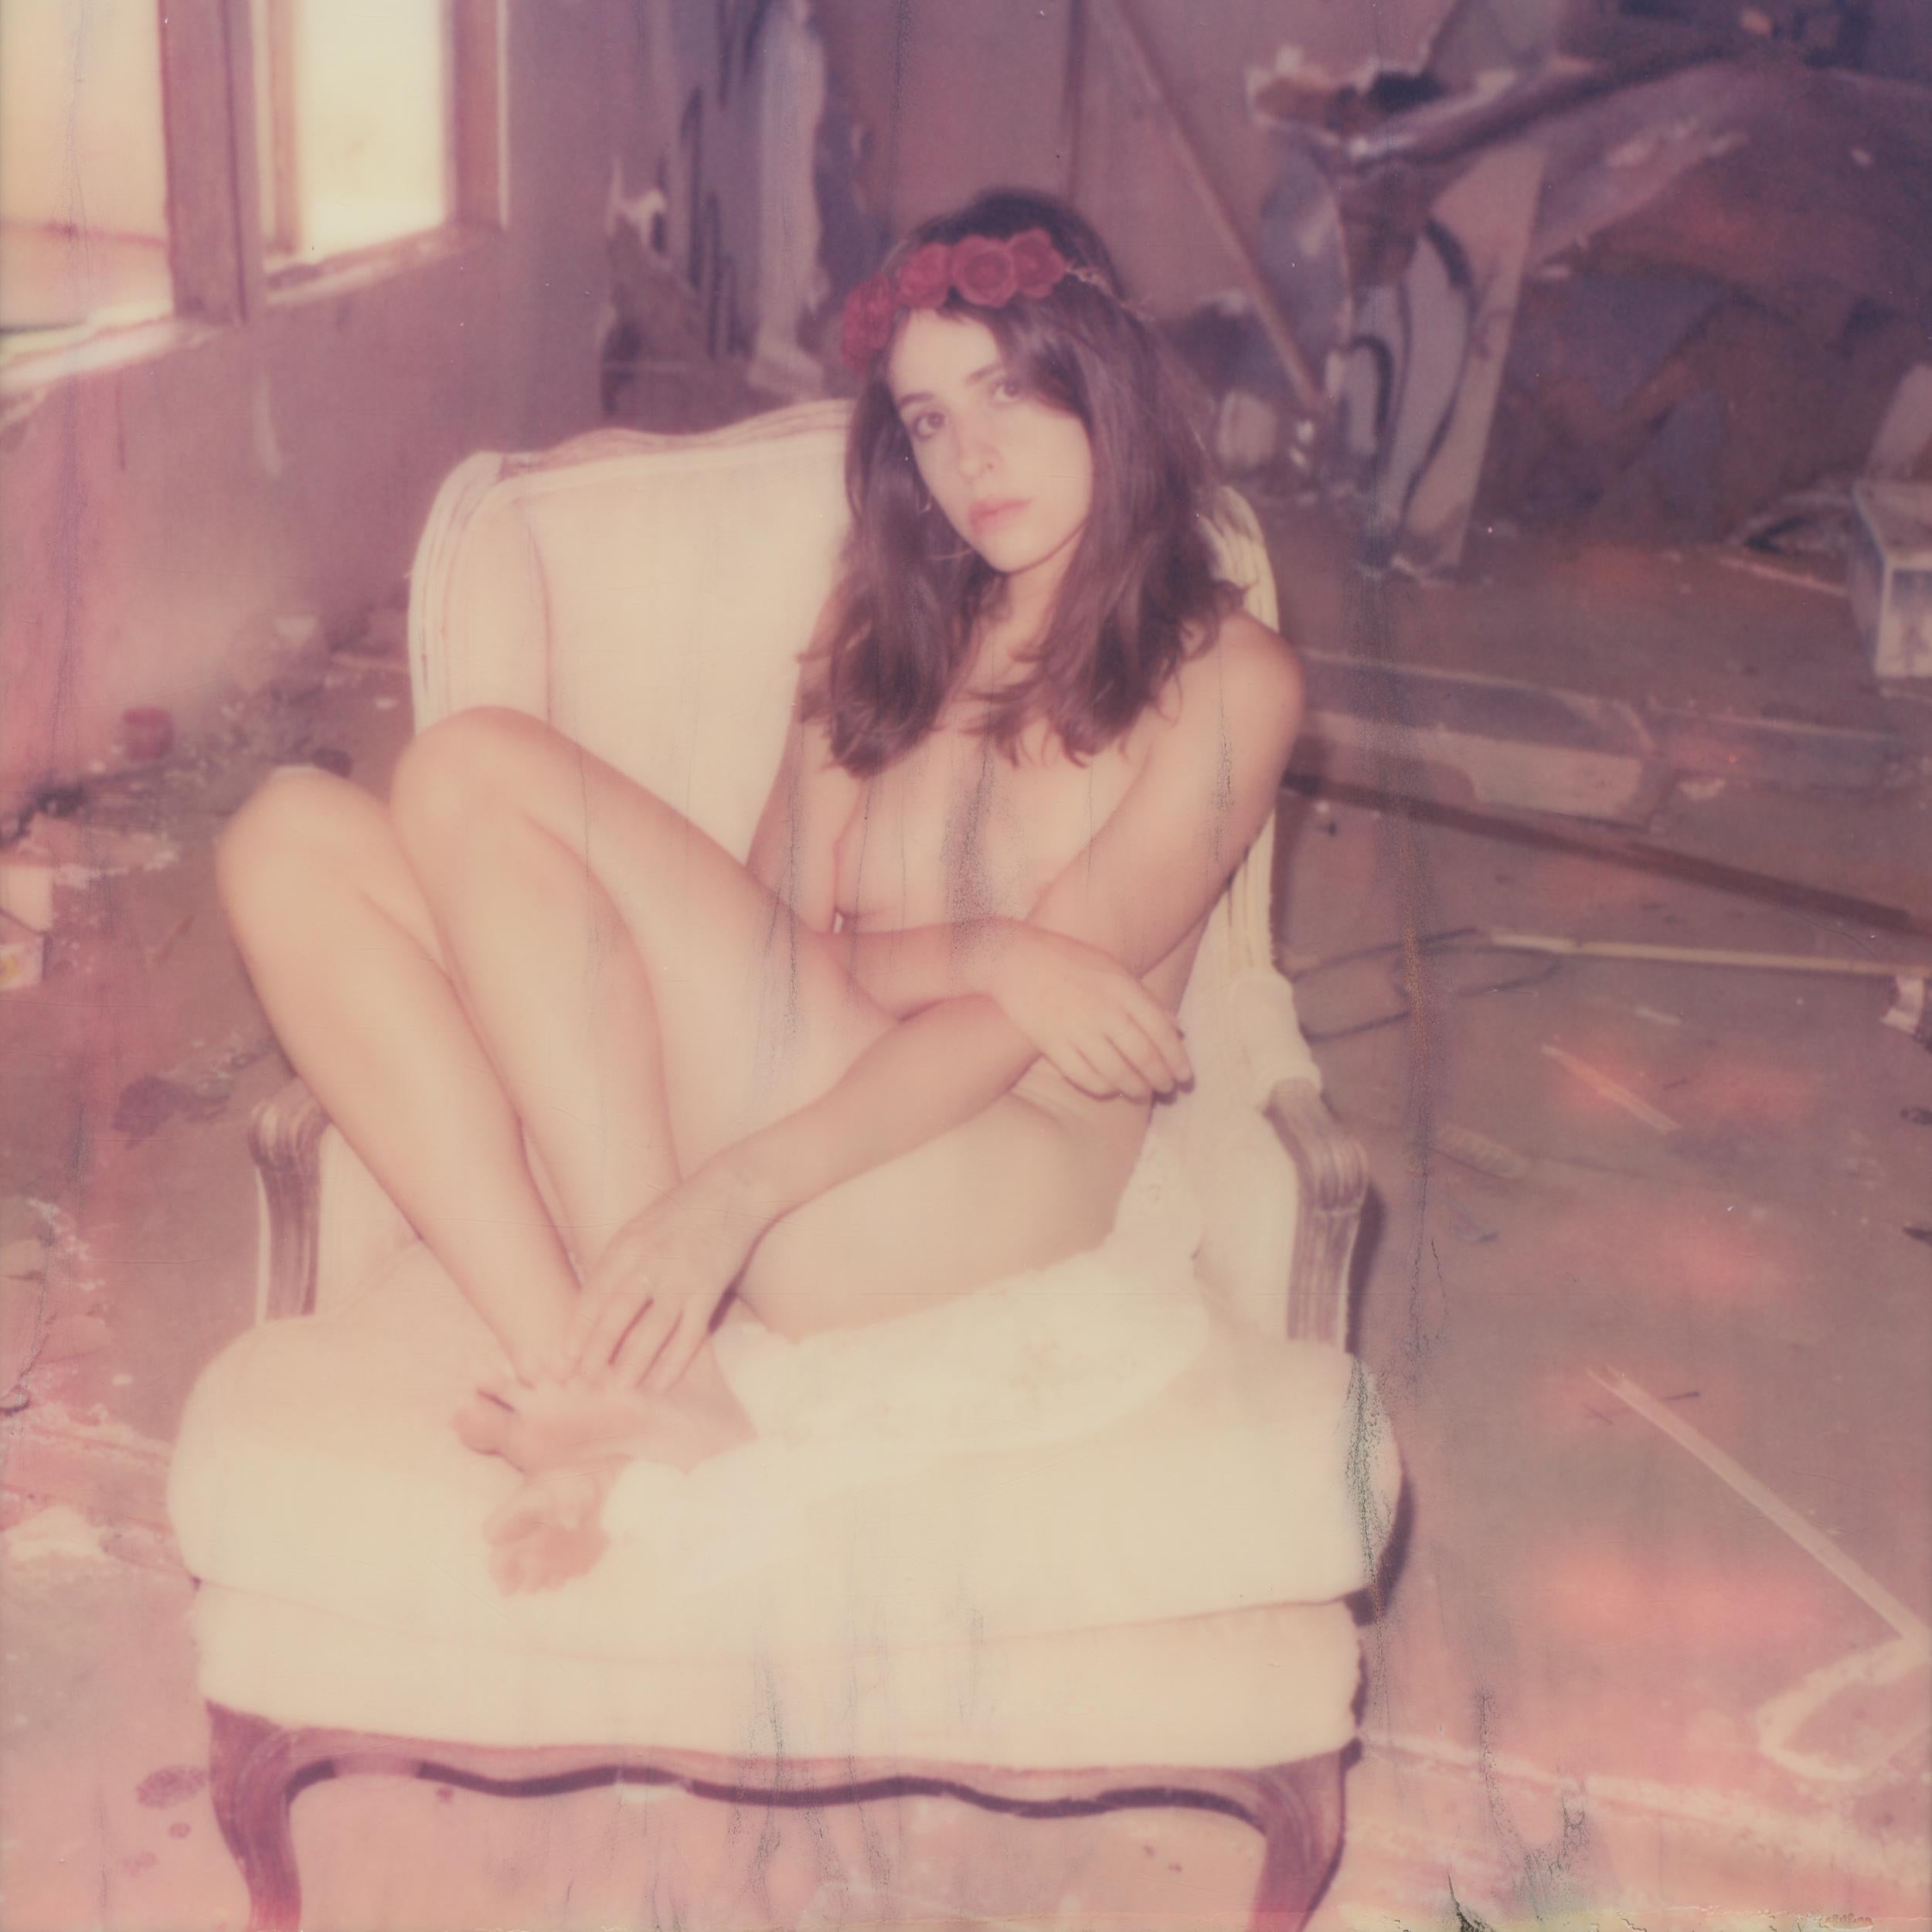 Kirsten Thys van den Audenaerde Nude Photograph - Heart and Soul - Contemporary, Polaroid, Nude, Color, Women, 21st Century